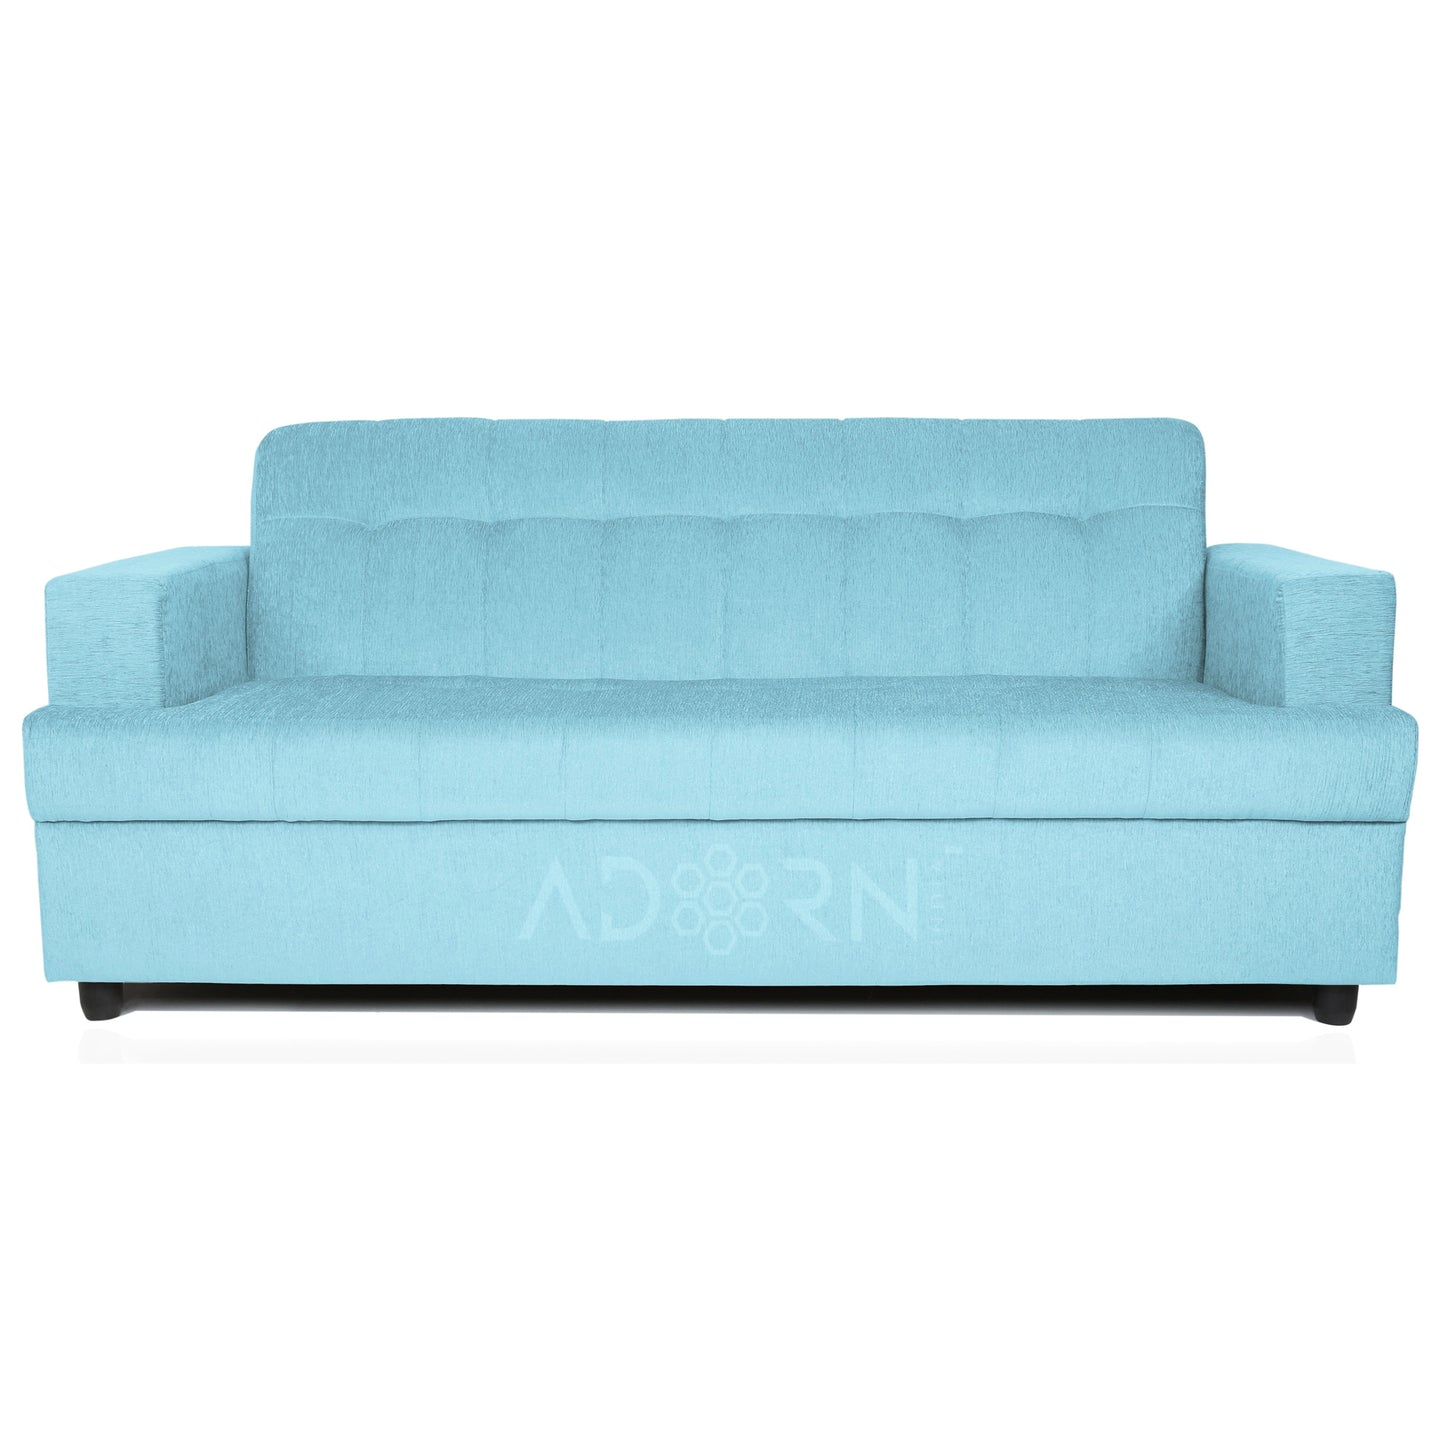 Adorn India Aleena 3 Seater Sofa(Light Blue)